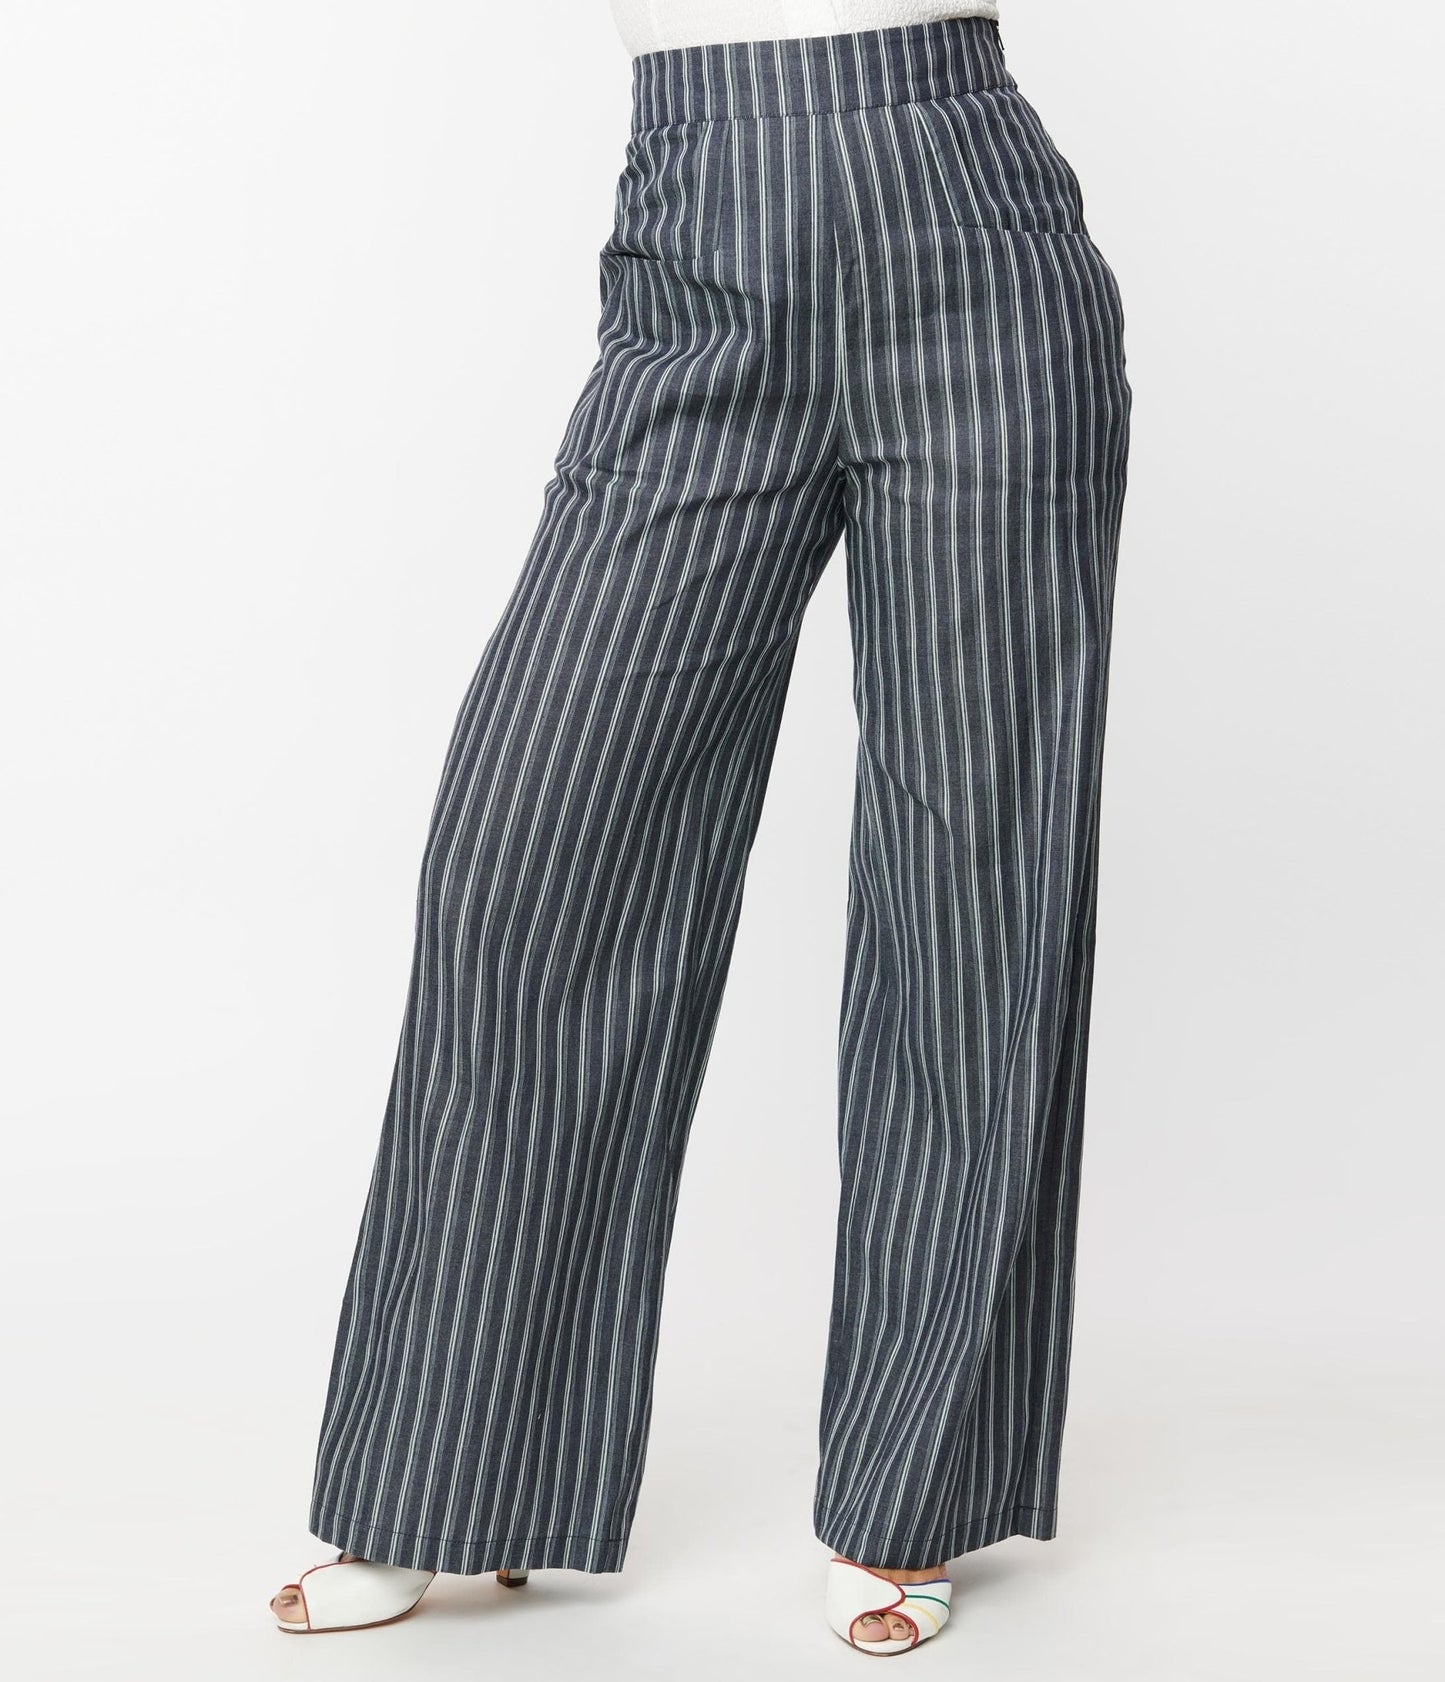 SAILOR DENIM PANTS, high waist, 1940's style swing pants